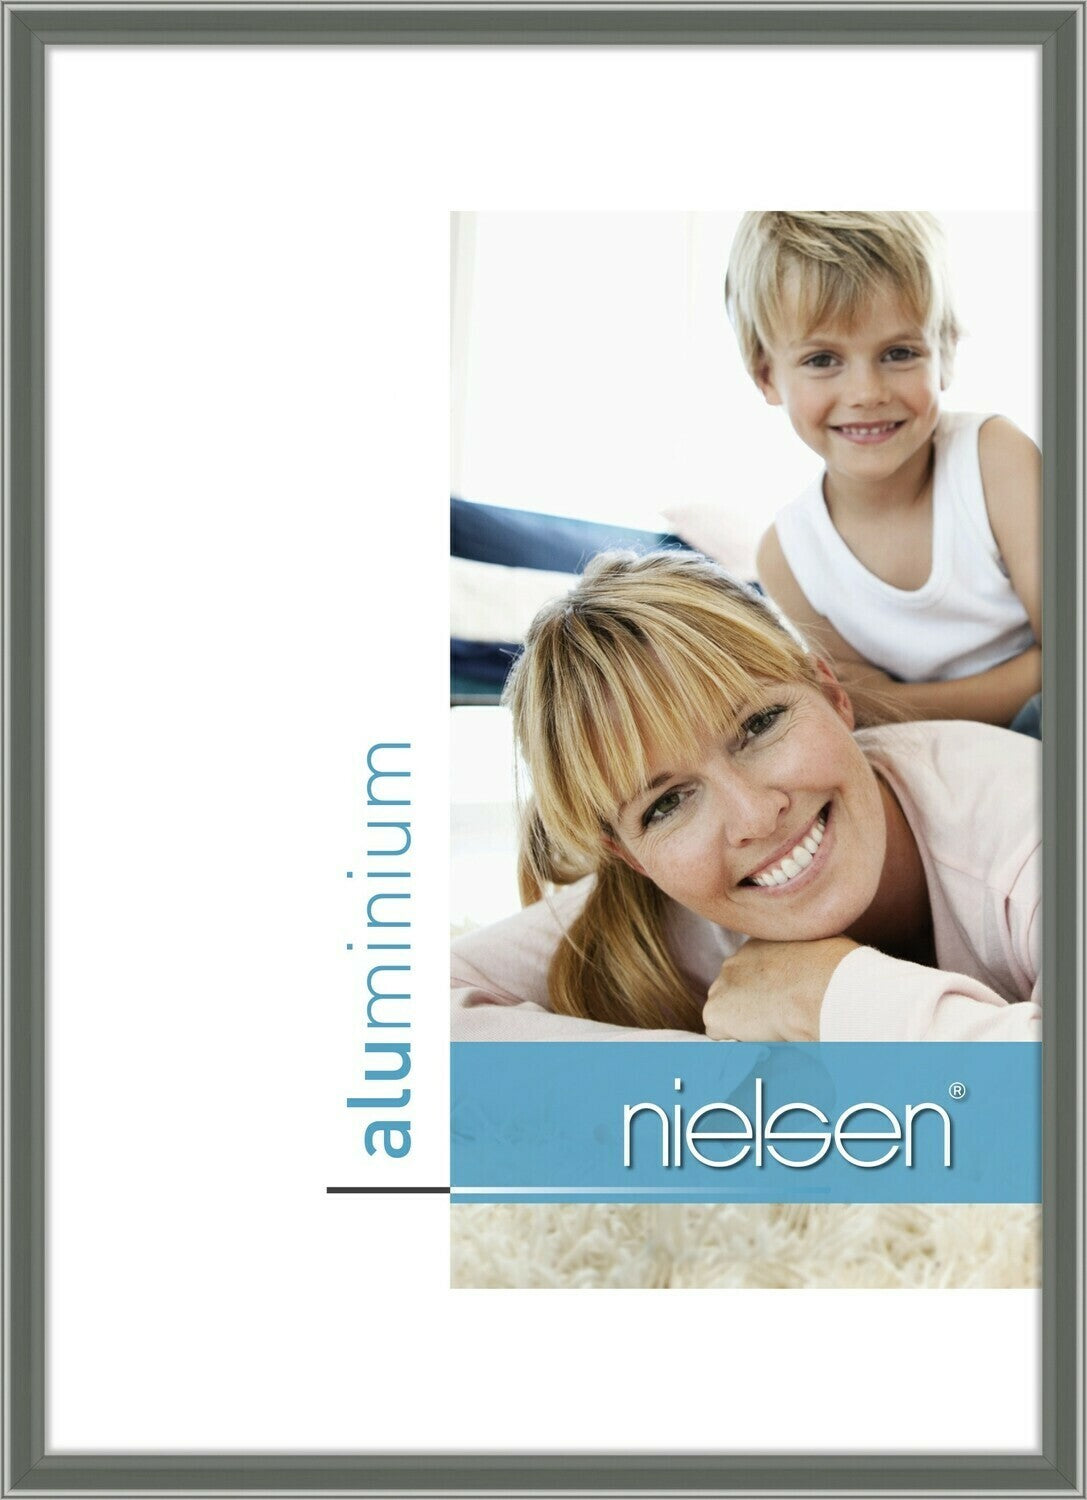 10 x 15cm | Classic Nielsen Frames